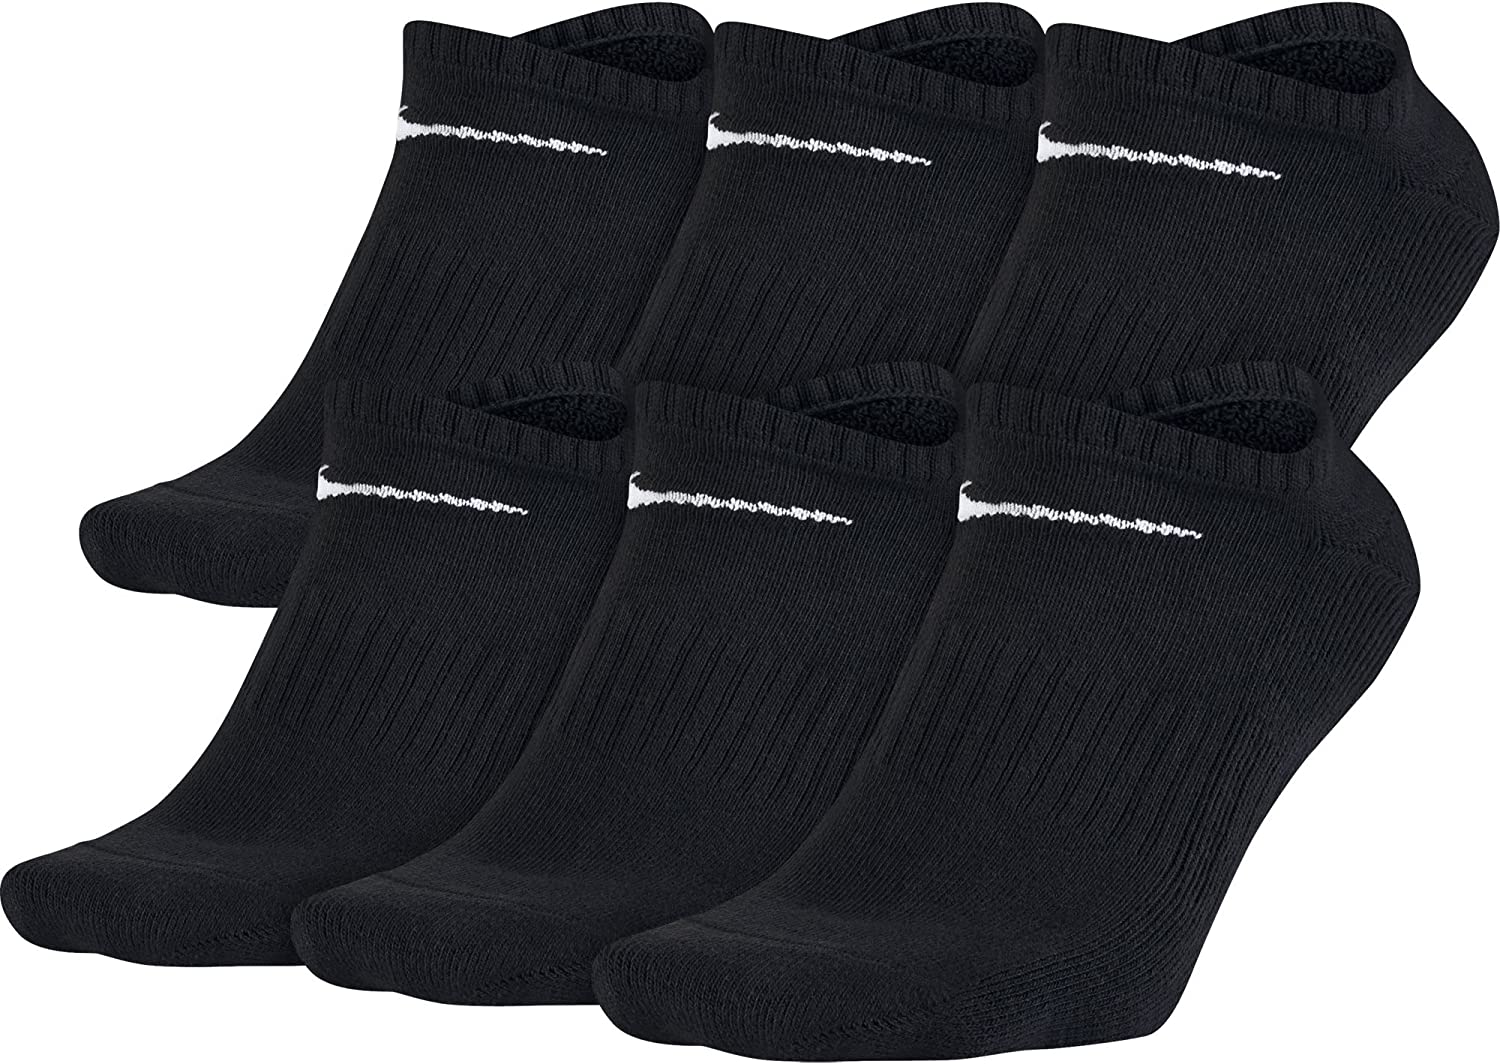 Nike Unisex Men's Women's Cotton Cushion No Show Socks 6-Pack - Black